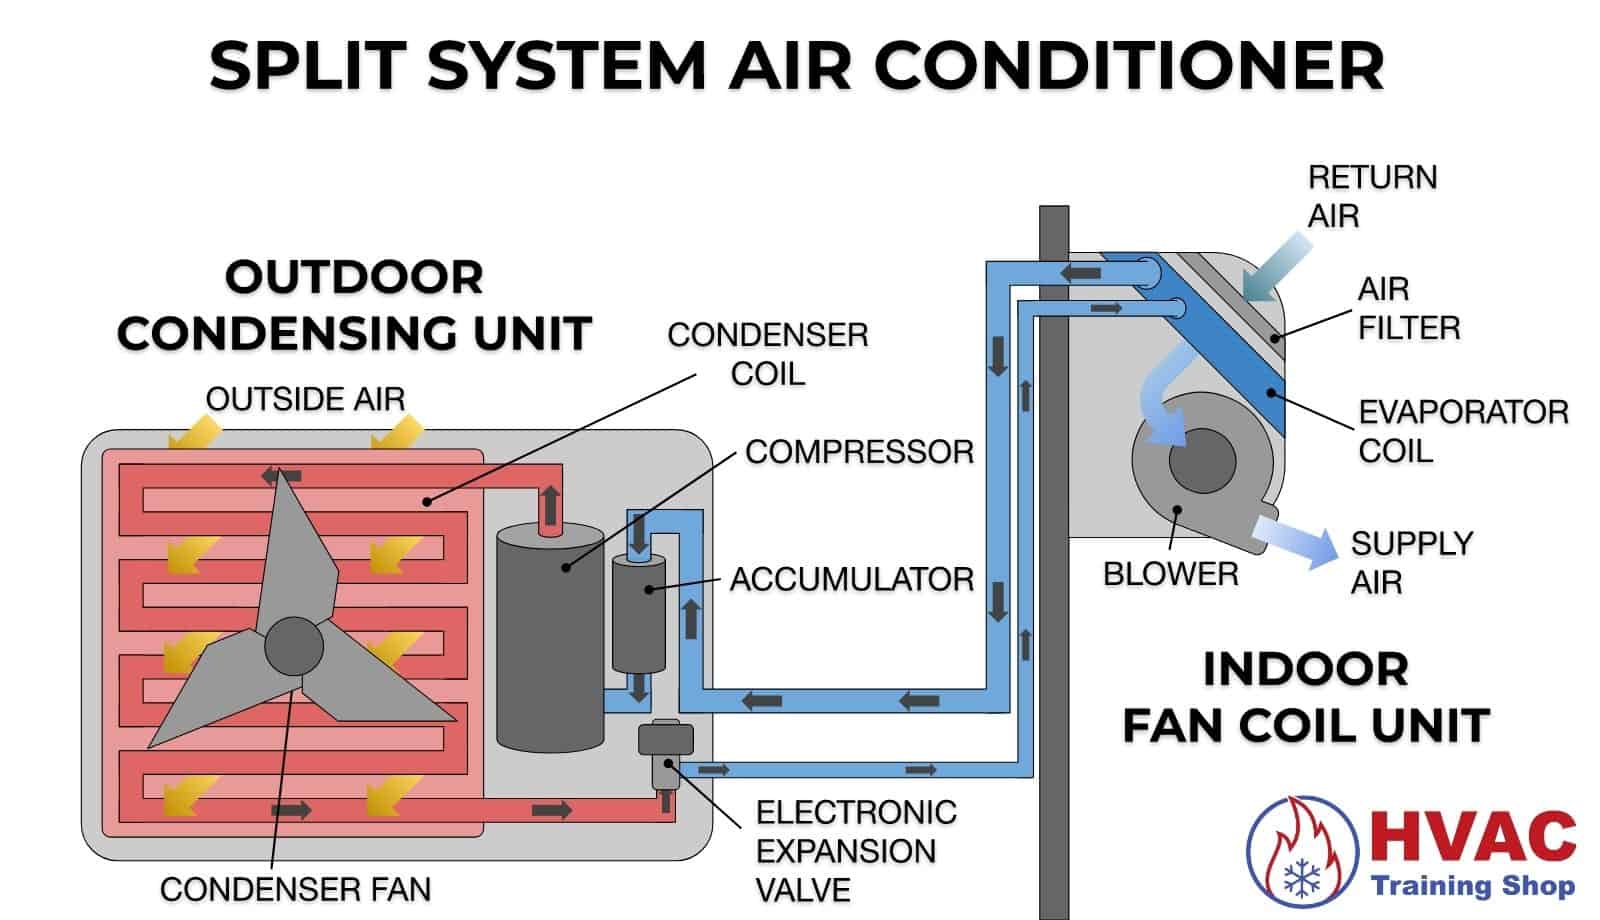 Fan Coil Unit Air Handling - What's the HVAC Training Shop